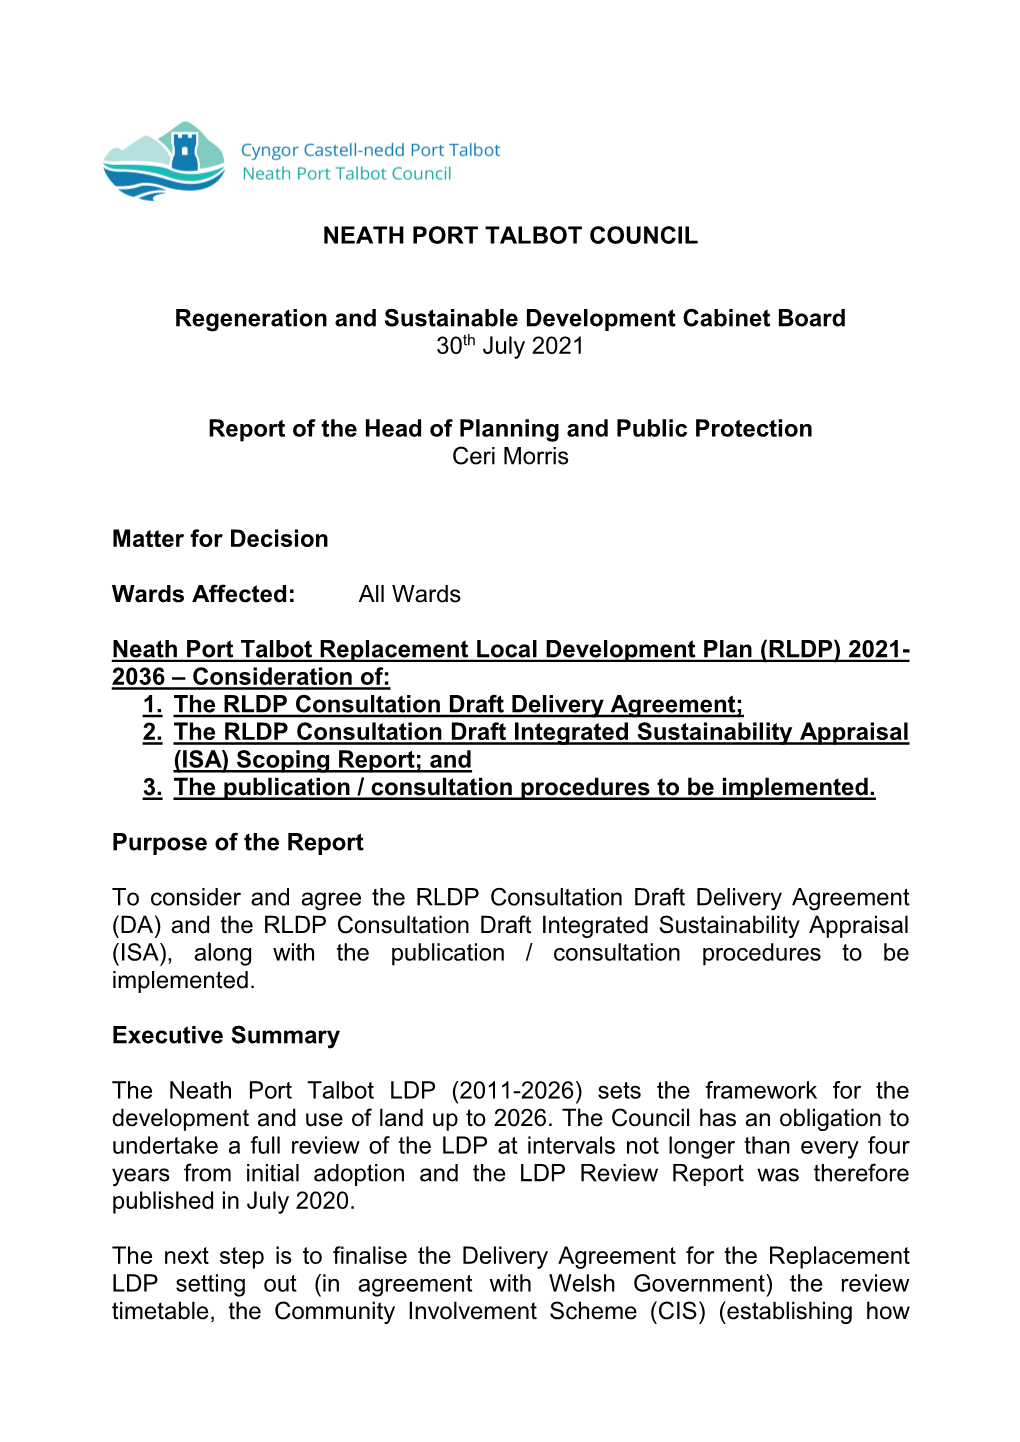 Consideration of Neath Port Talbot